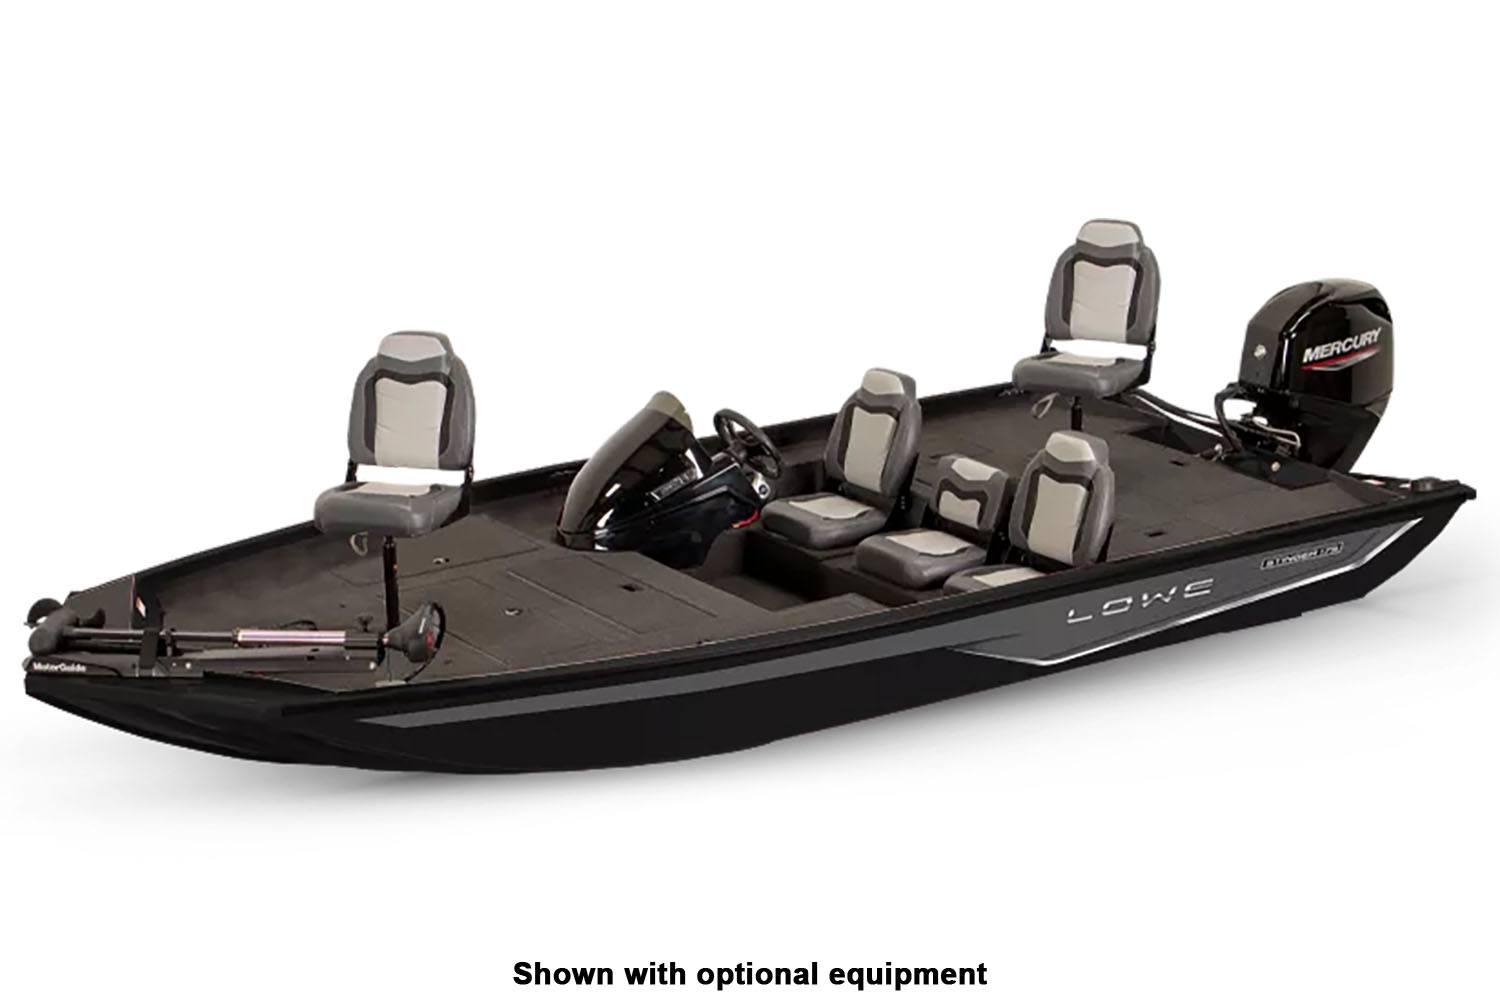 Lowe Stinger 175c boats for sale - boats.com